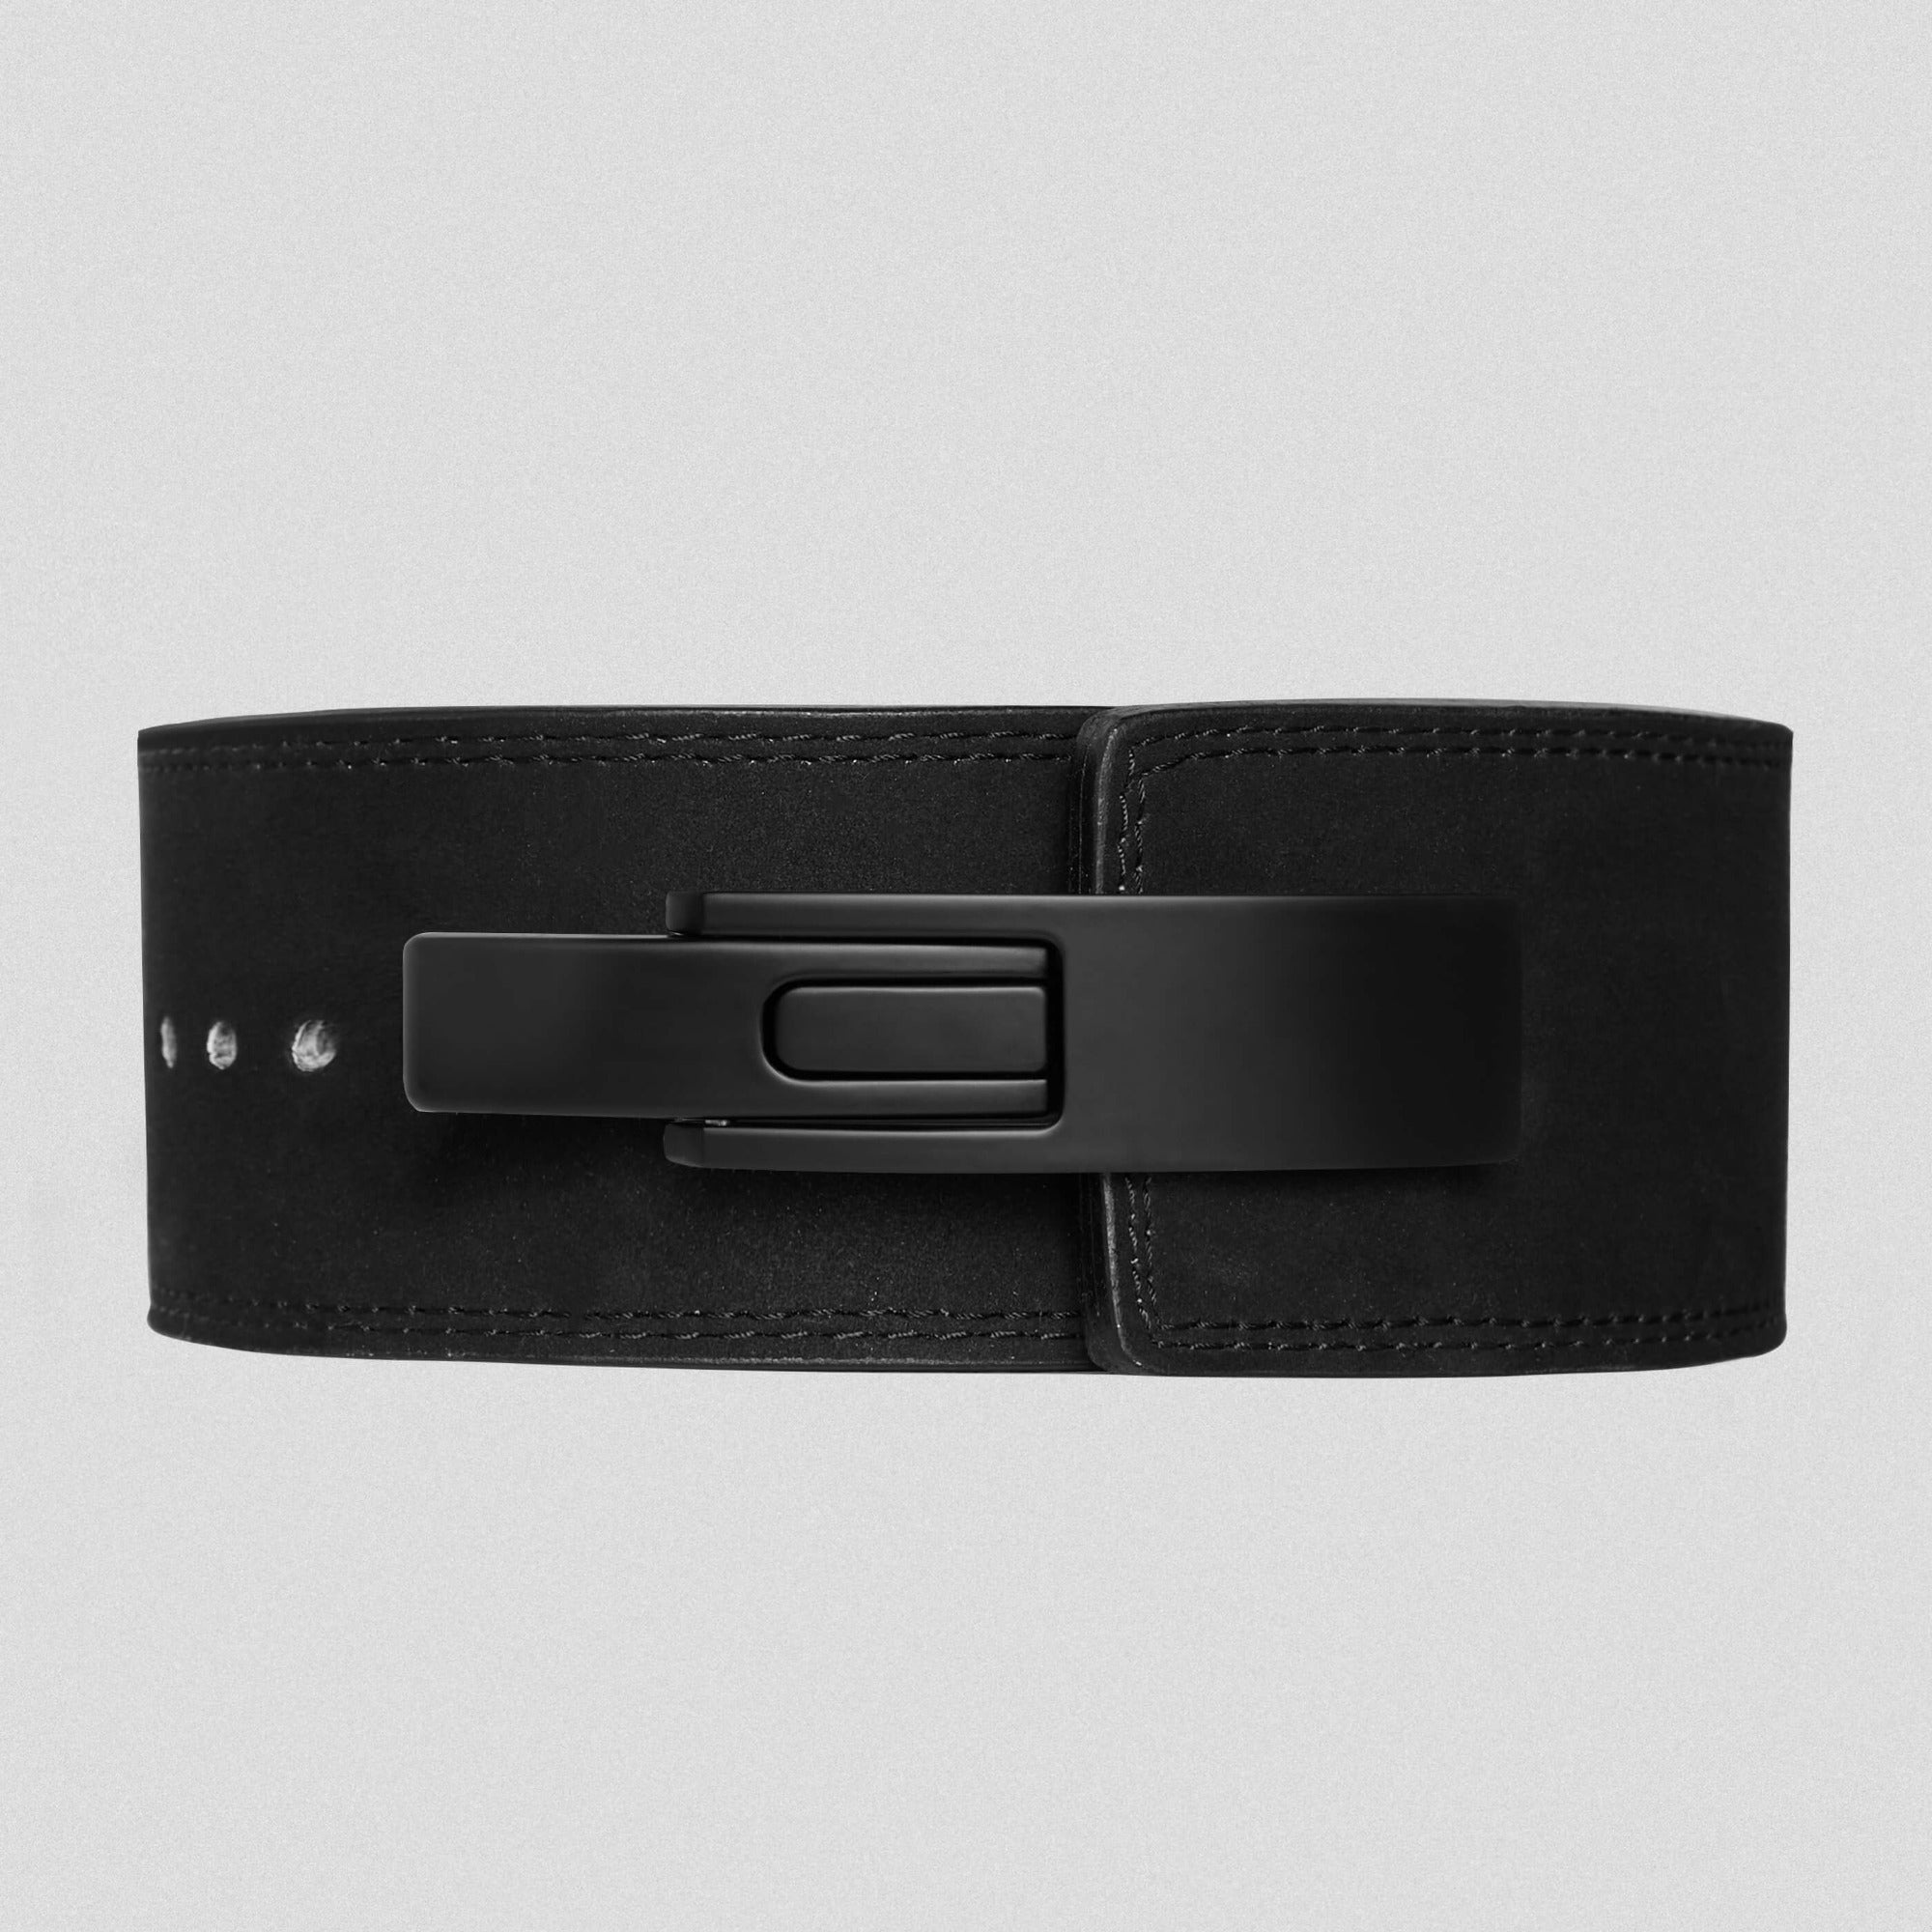 Gymreapers 10mm Lever Belt Black Medium Size Adjustable Weight